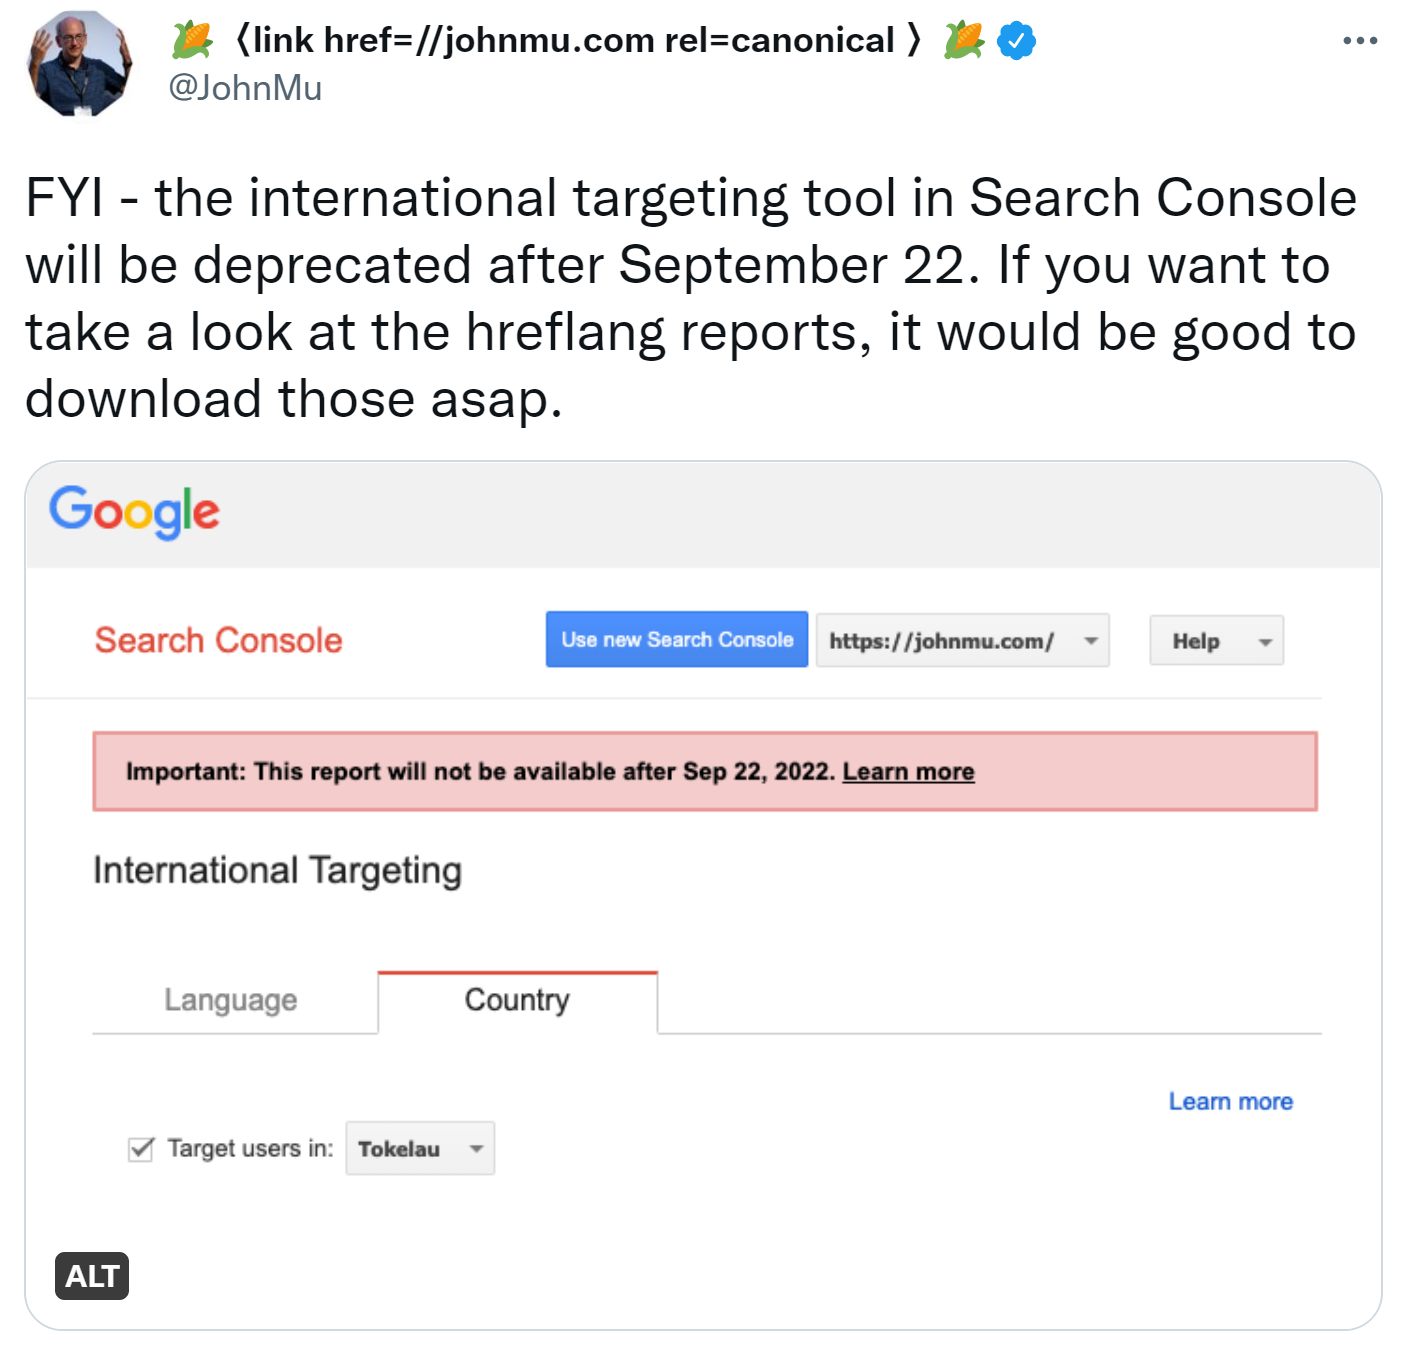 Google: John Müller erinnert daran, dass der International Targeting Report in der Google Search Console zum 22. September eingestellt wird